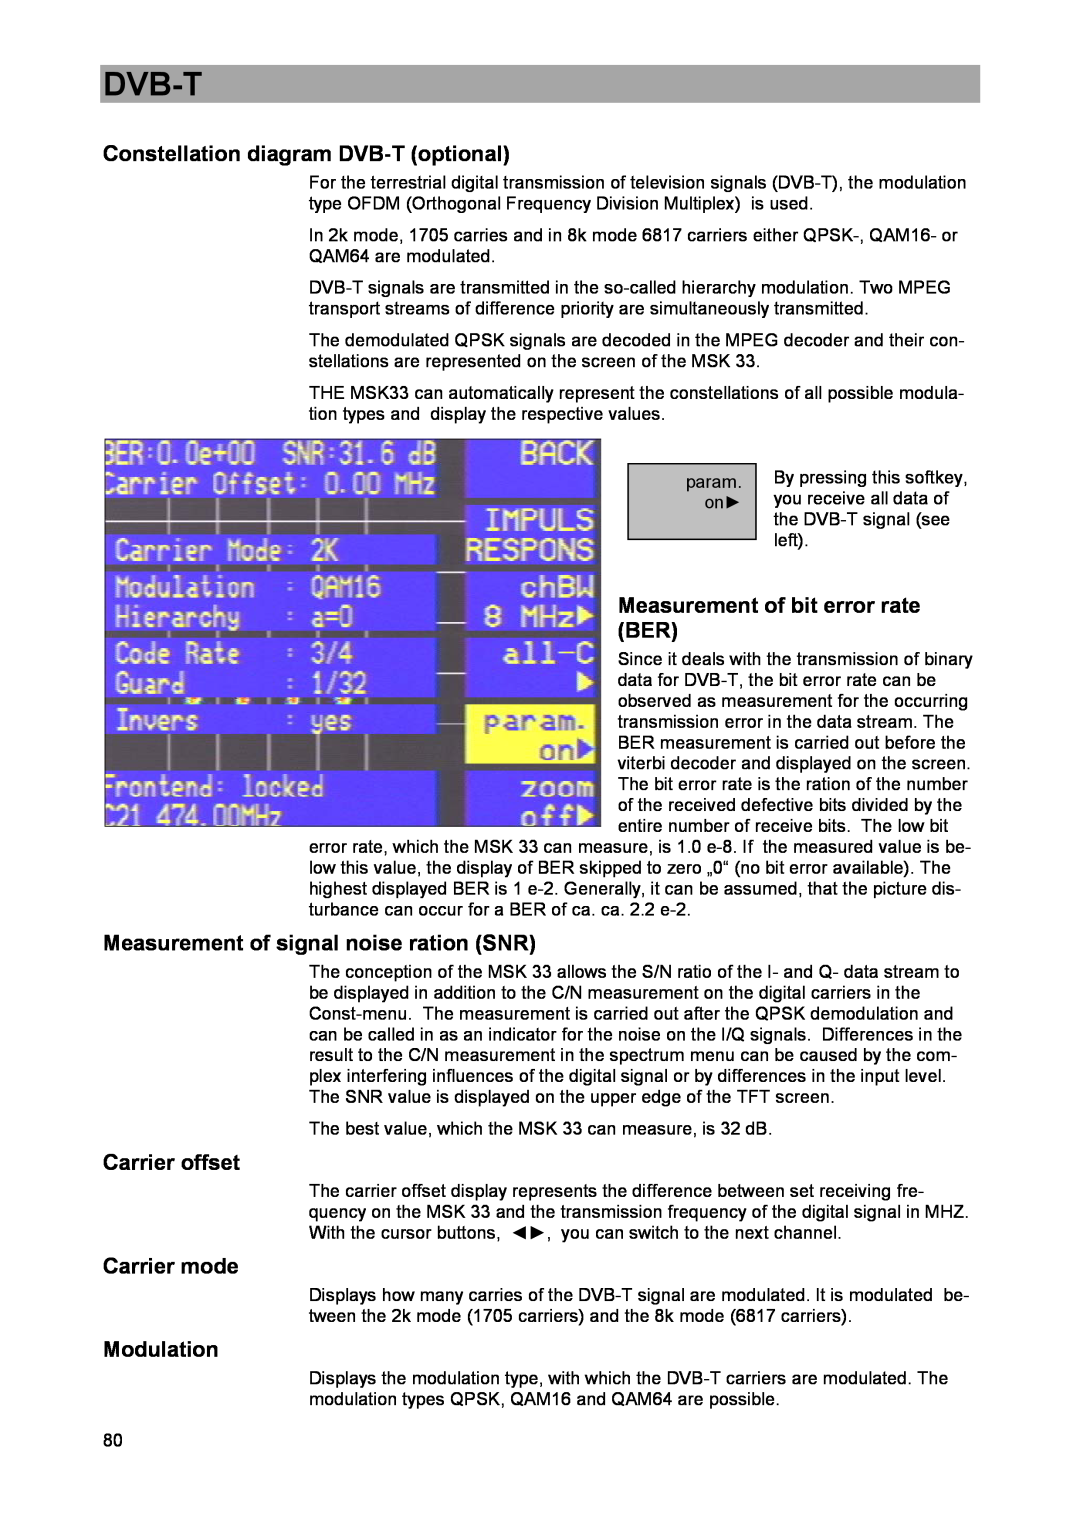 DreamGEAR MSK 33 Dvb-T, Constellation diagram DVB-T optional, Measurement of bit error rate BER, Carrier mode, Modulation 